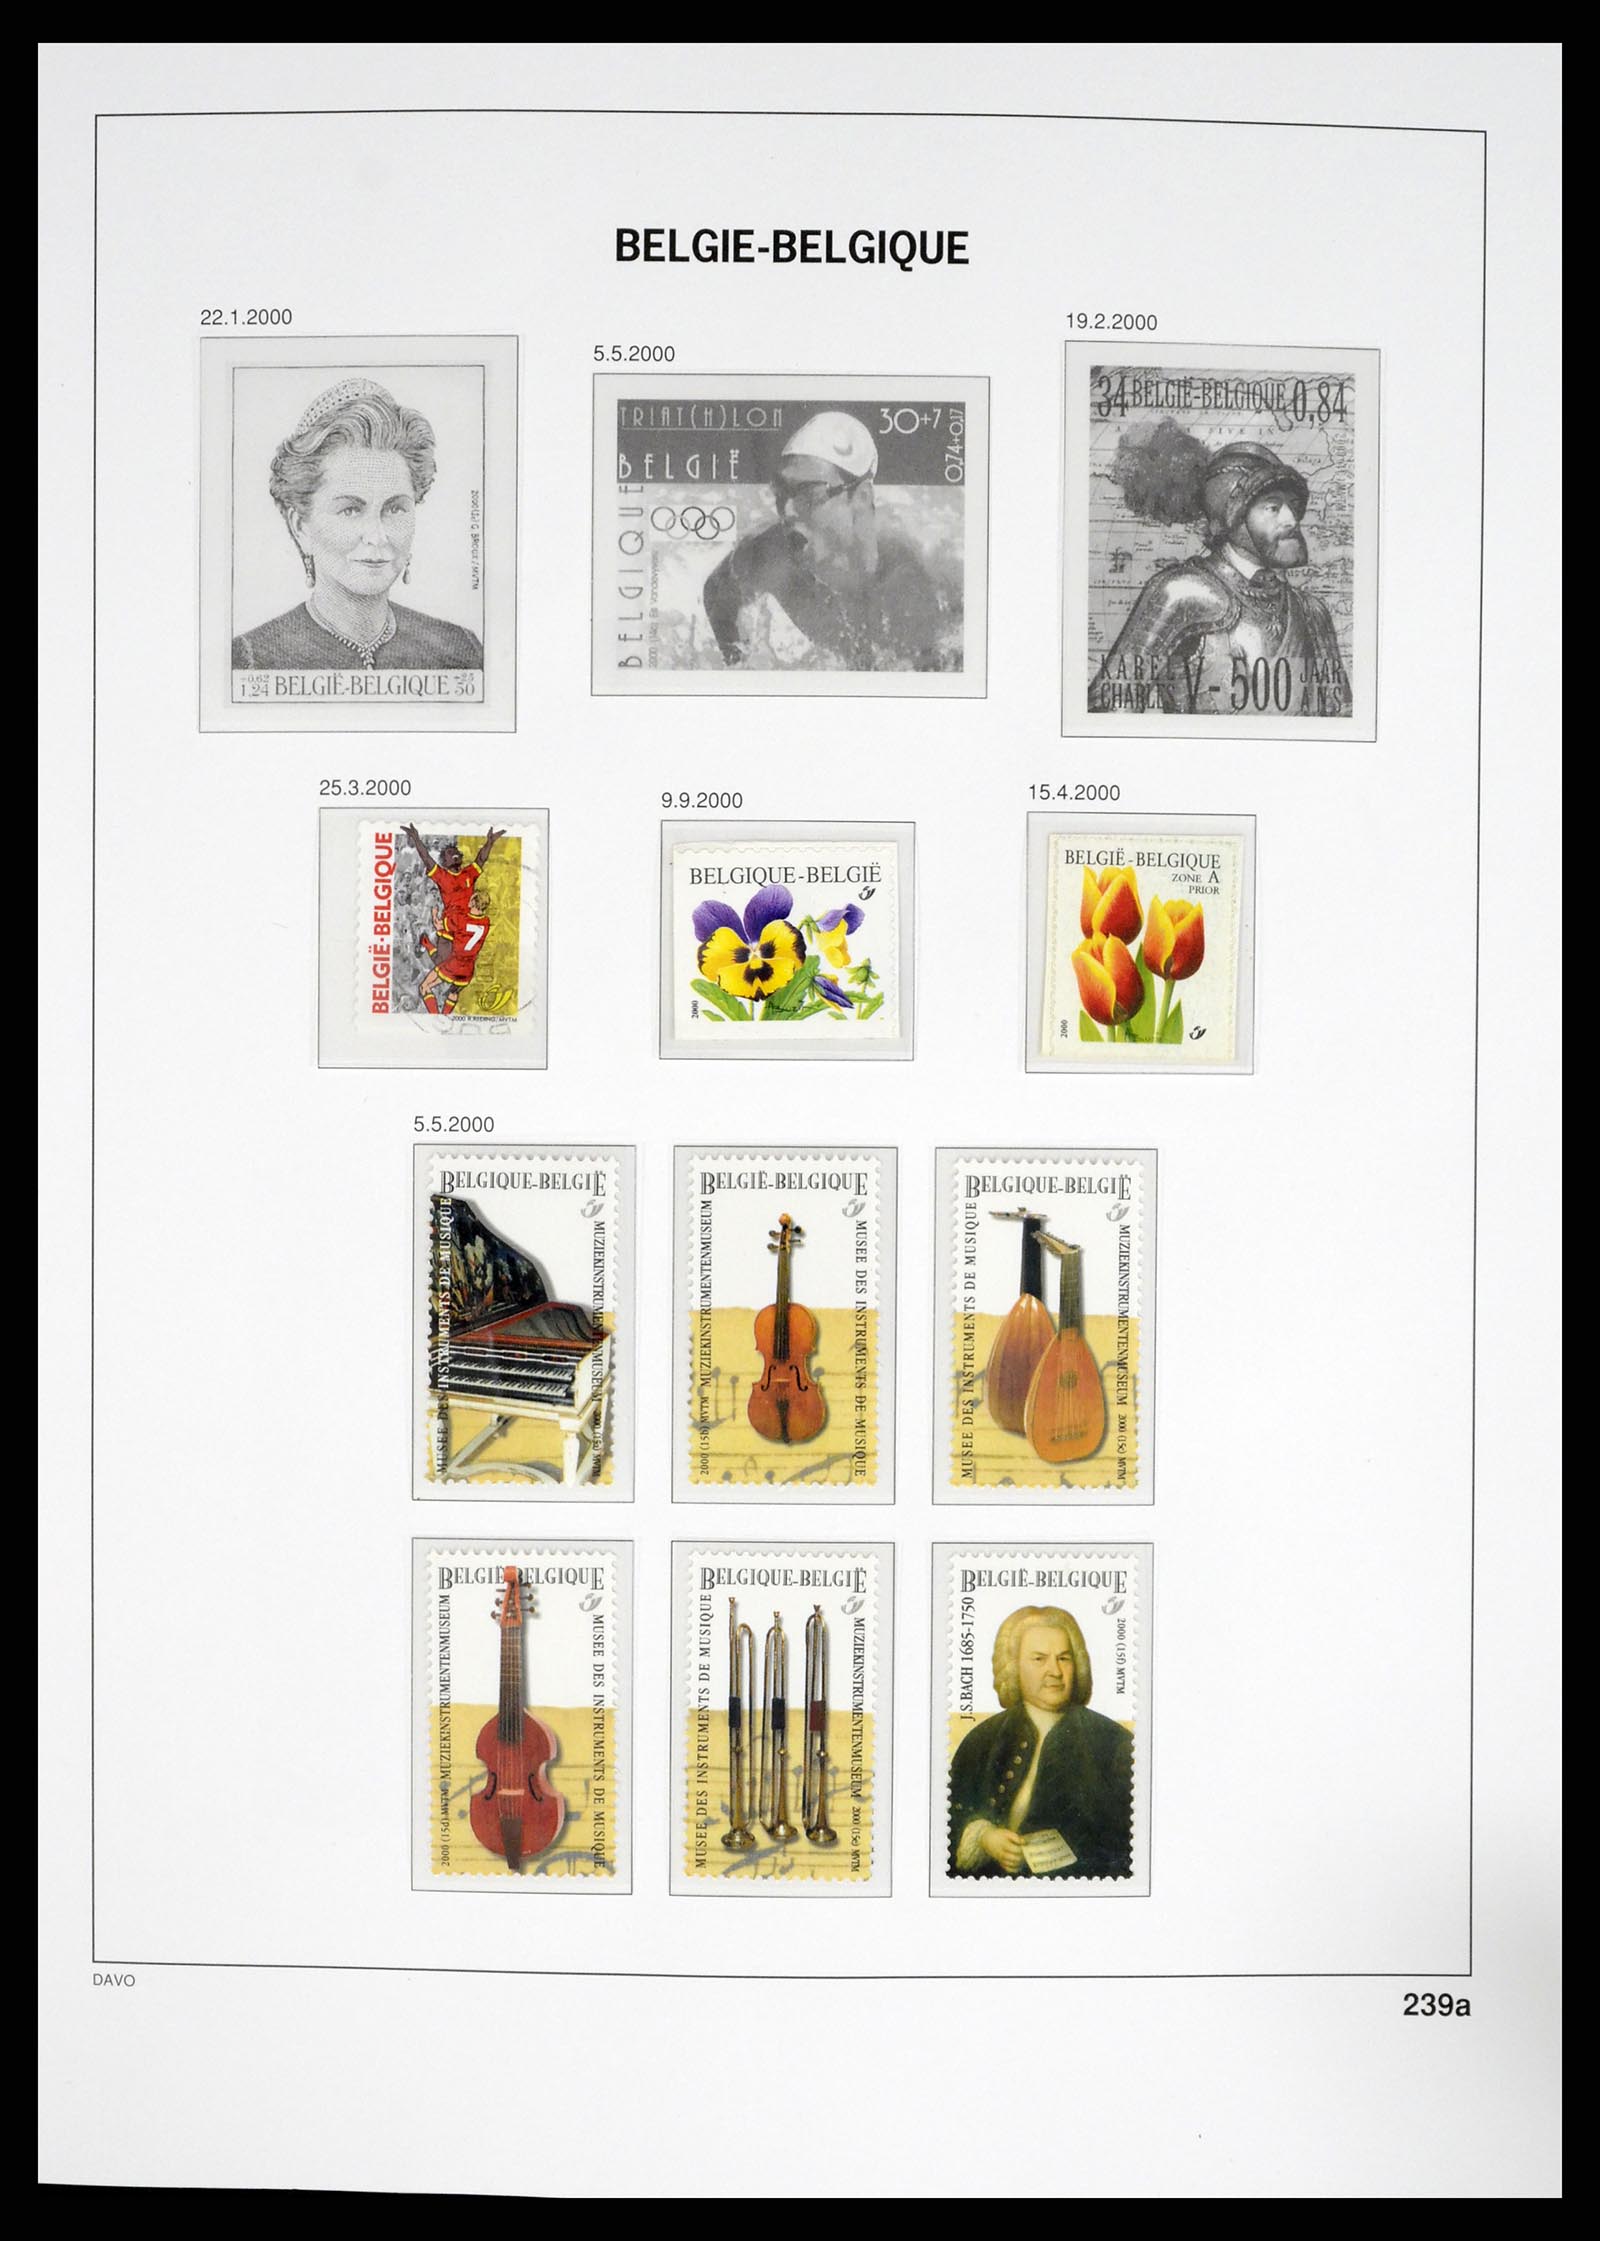 37368 166 - Stamp collection 37368 Belgium 1969-2003.